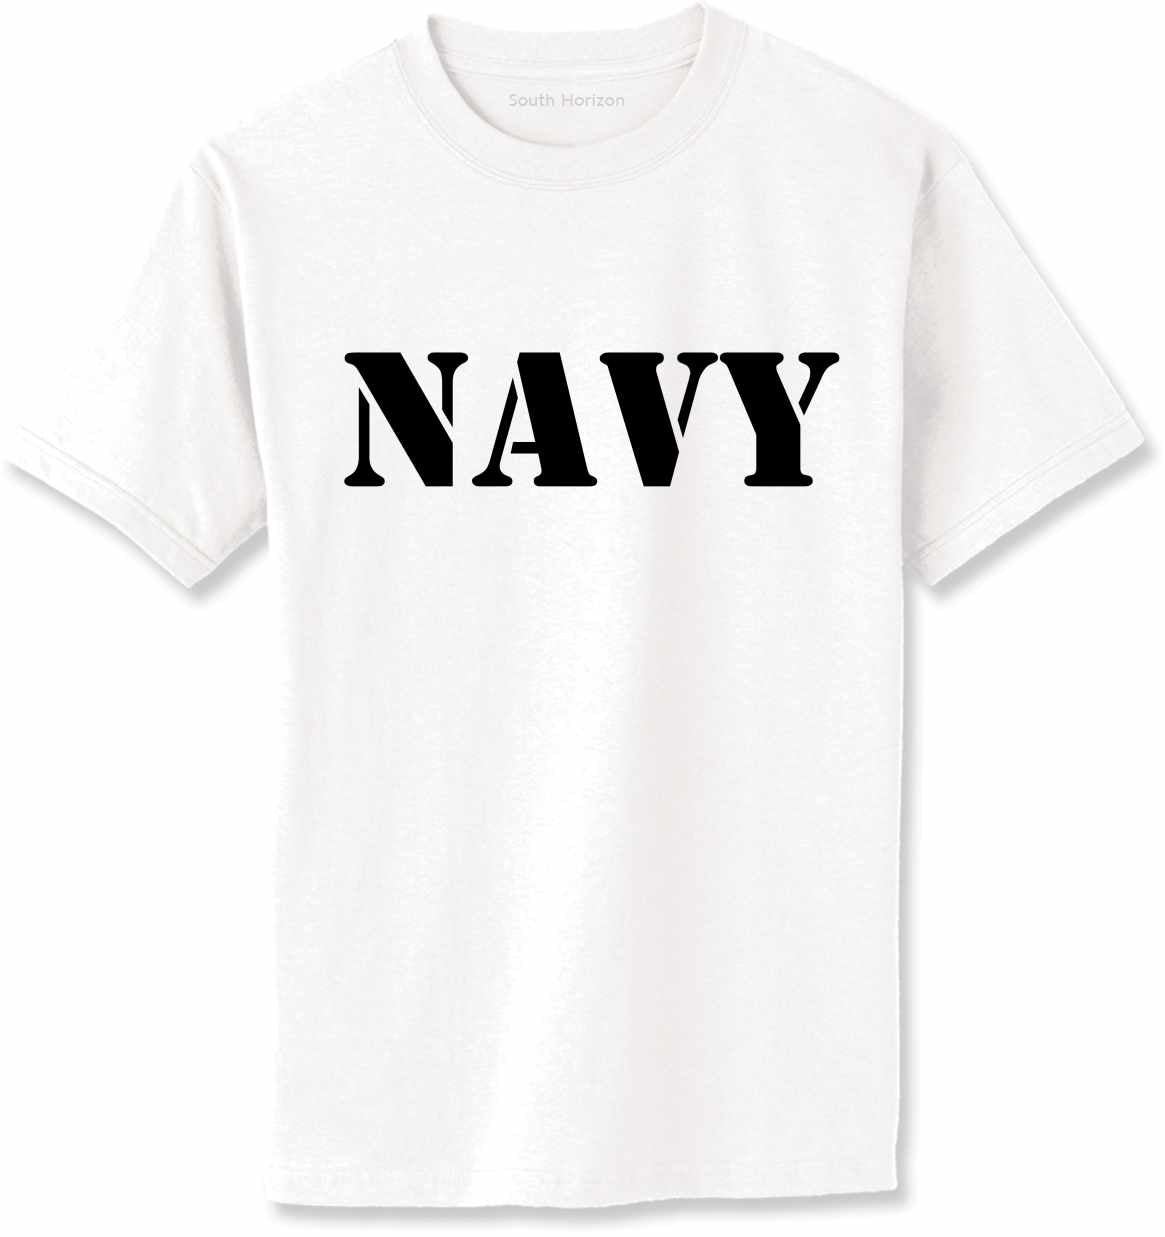 NAVY Adult T-Shirt (#346-1)